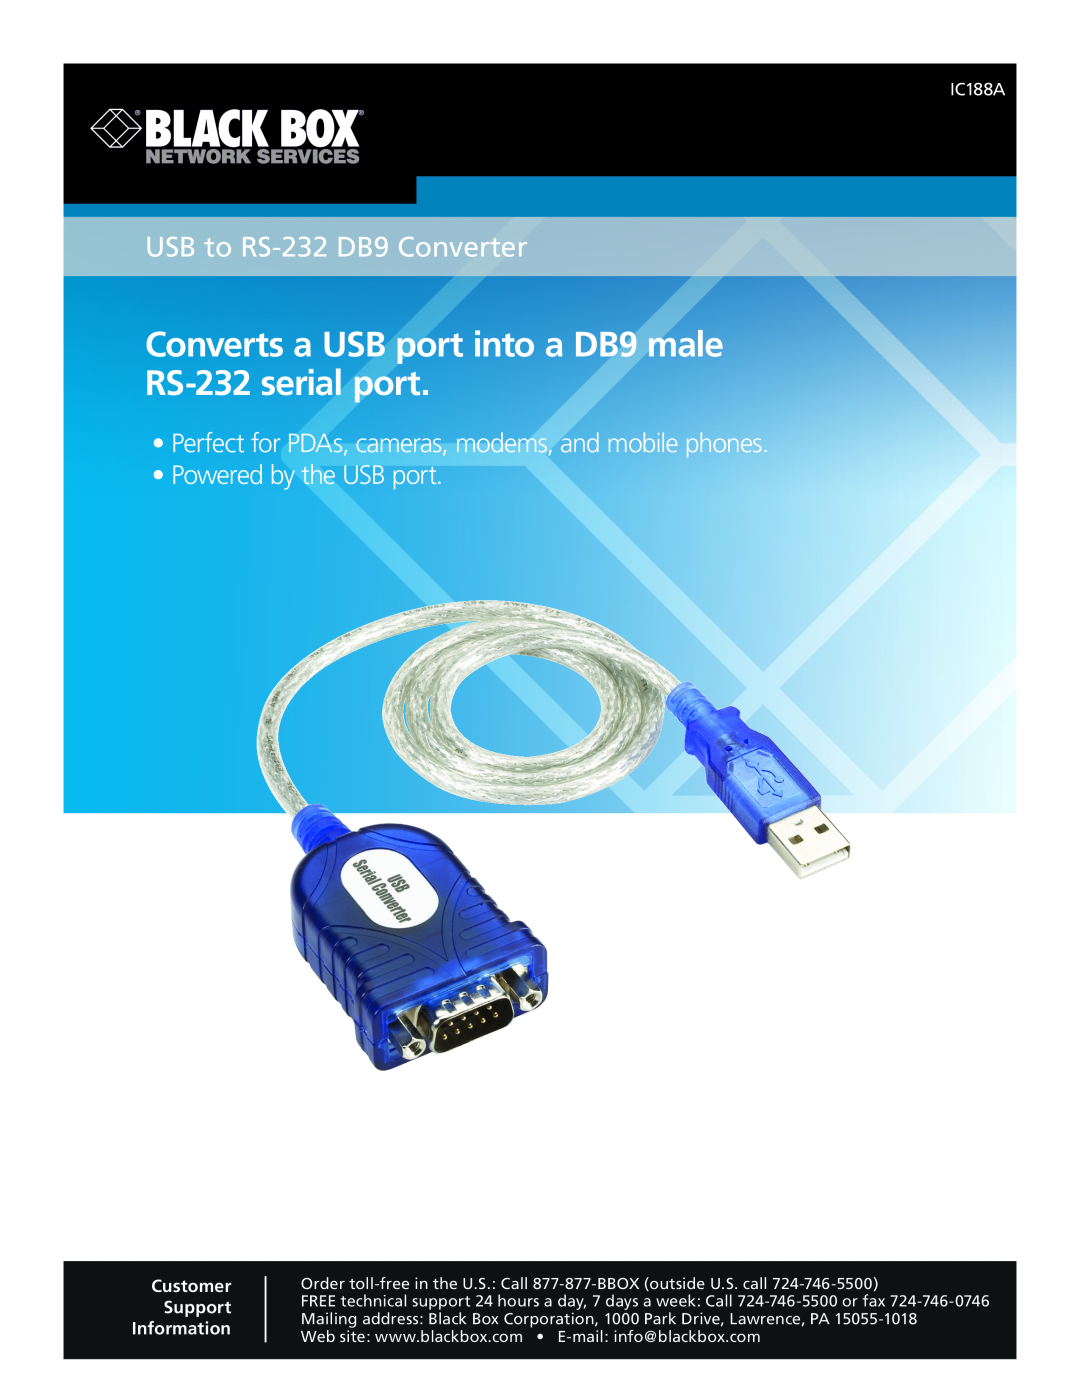 Black Box USB to RS-232 DB9 Converter manual Converts a USB port into a DB9 male, RS-232serial port, IC188A 